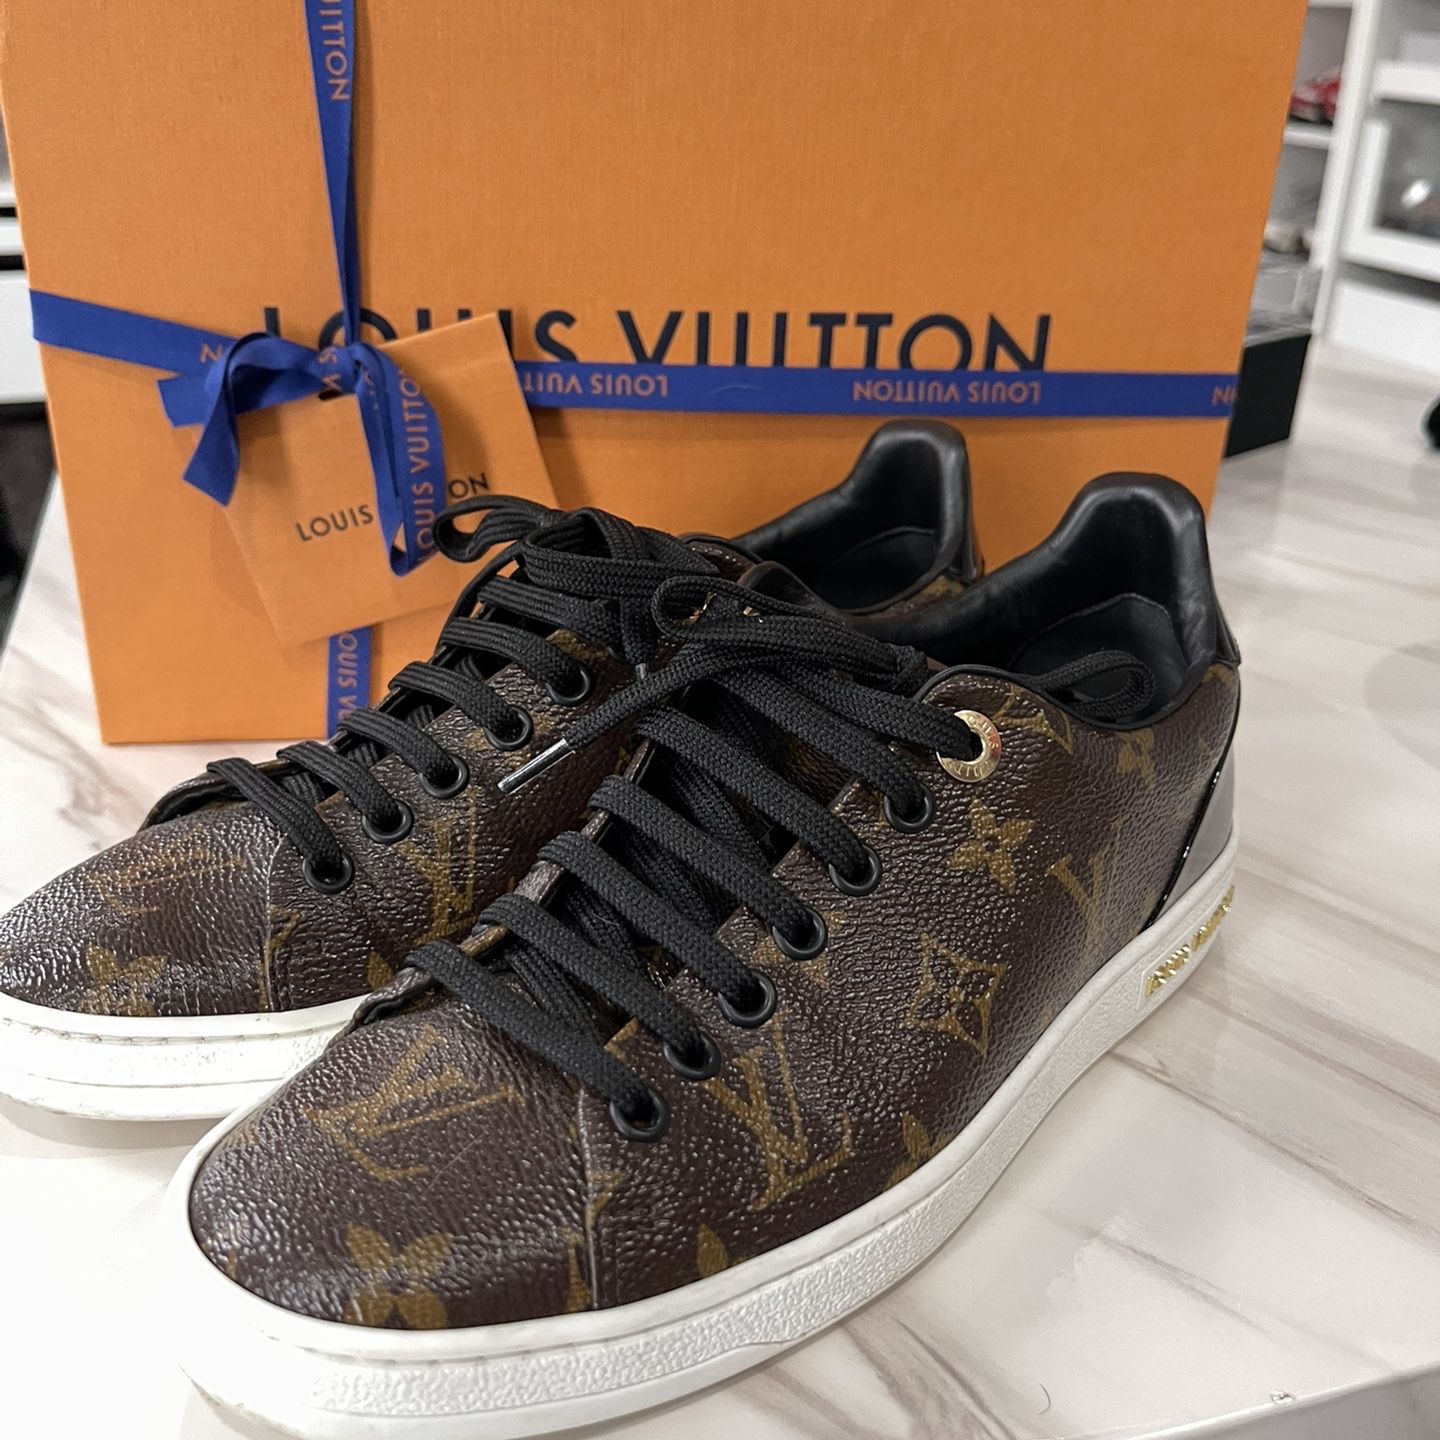 Louis Vuitton Frontrow Sneakers Size 5.5 for Sale in Hillside, NJ - OfferUp